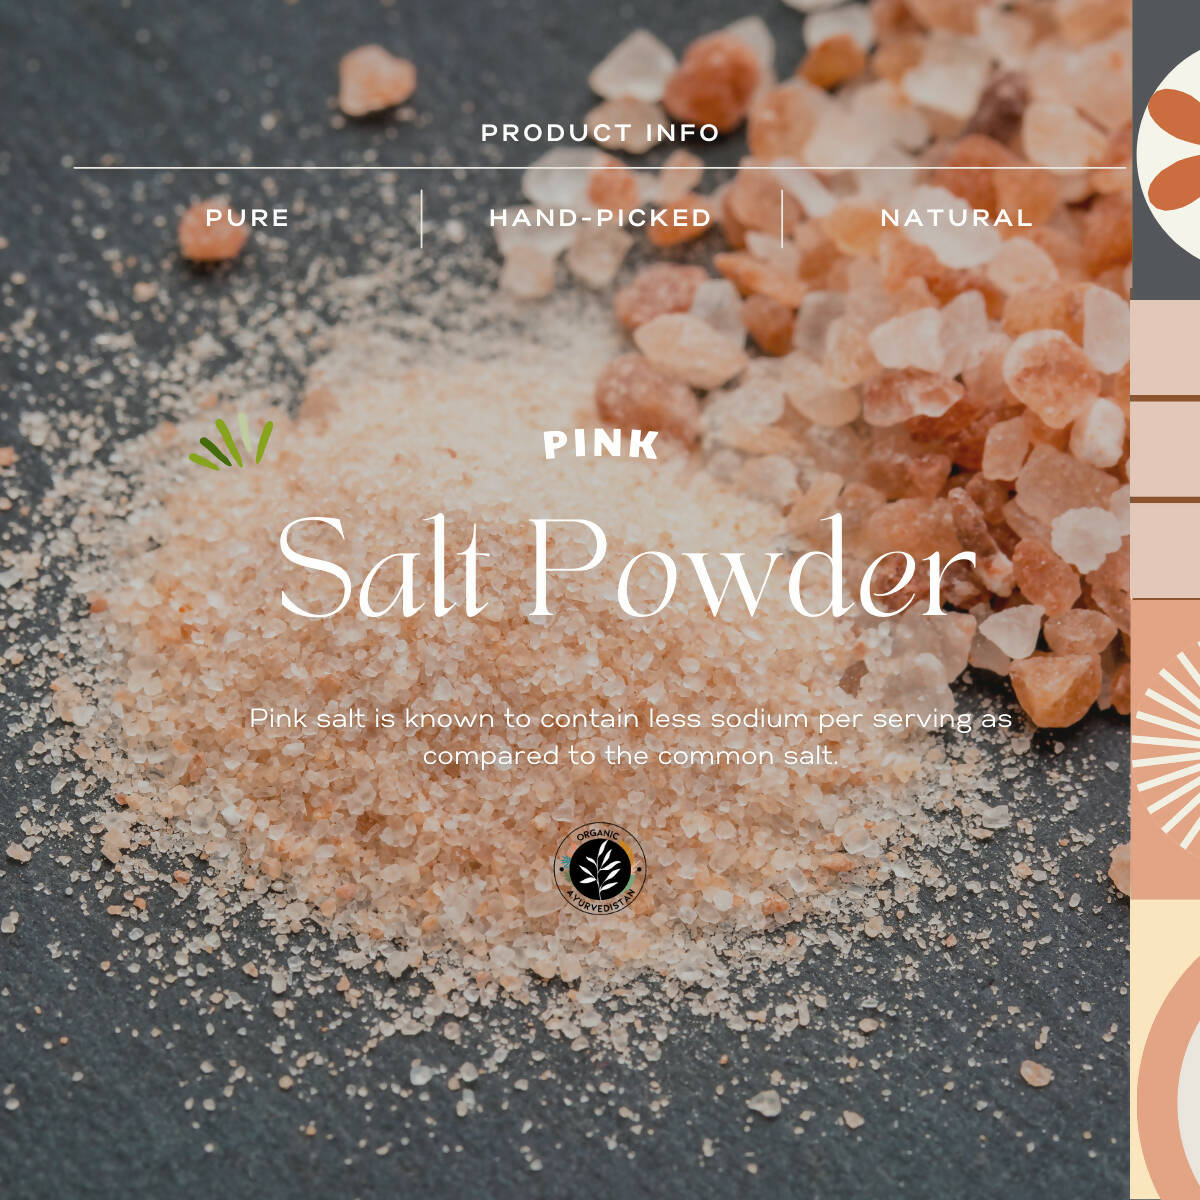 Organic Ayurve USA, Australia, Canada n Pink Salt Powder